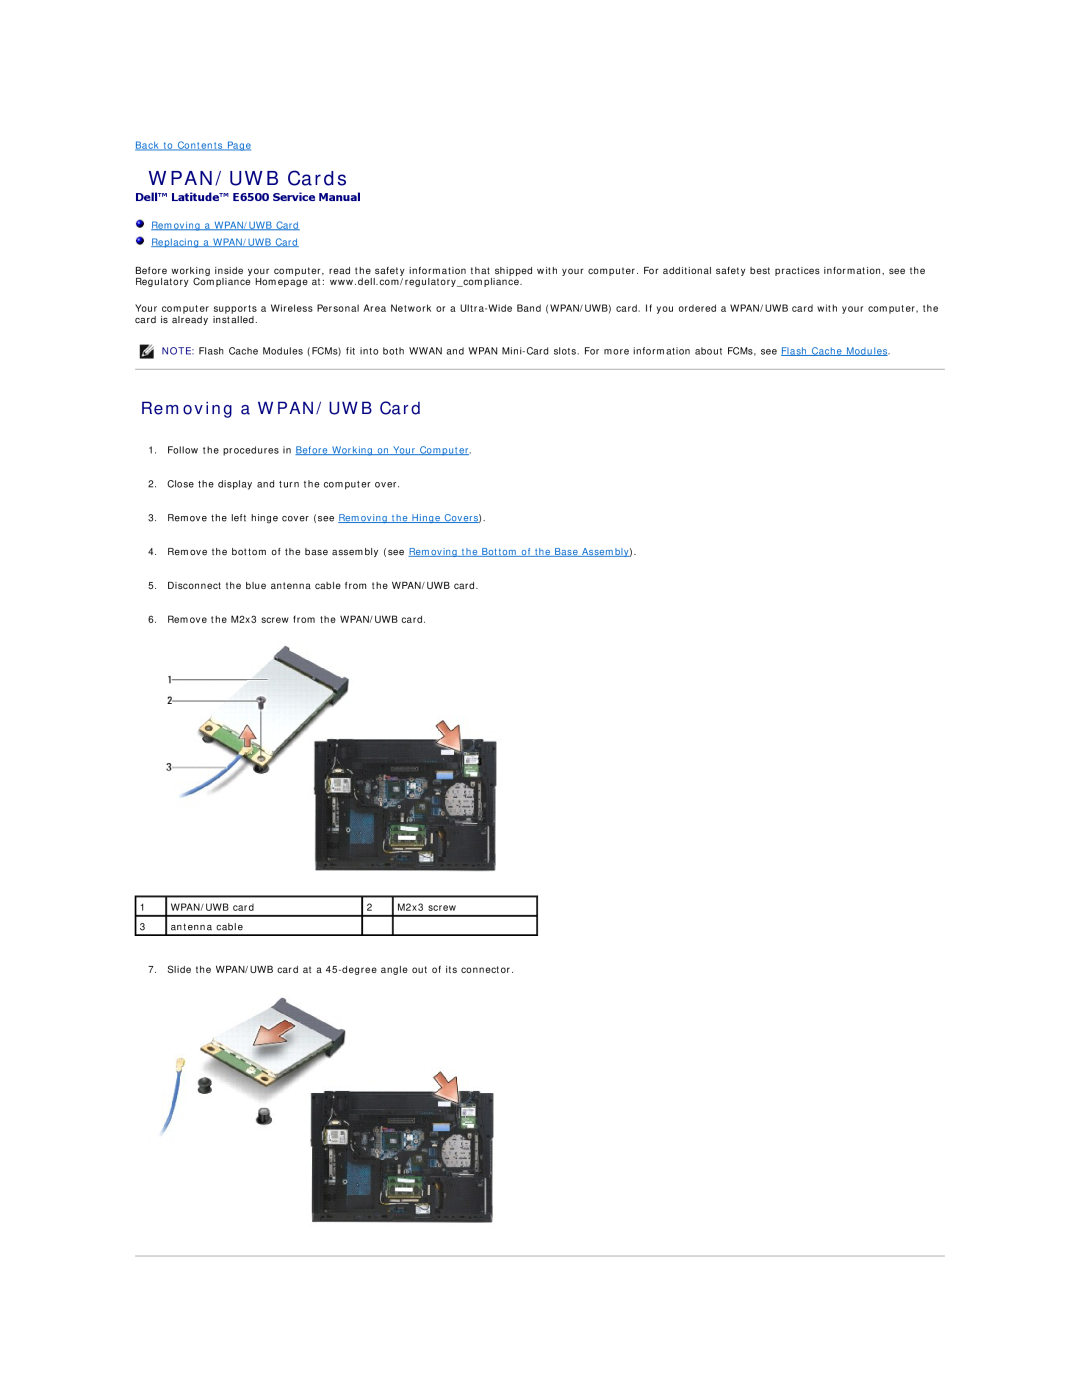 Dell manual WPAN/UWB Cards, Removing a WPAN/UWB Card Replacing a WPAN/UWB Card, Dell Latitude E6500 Service Manual 